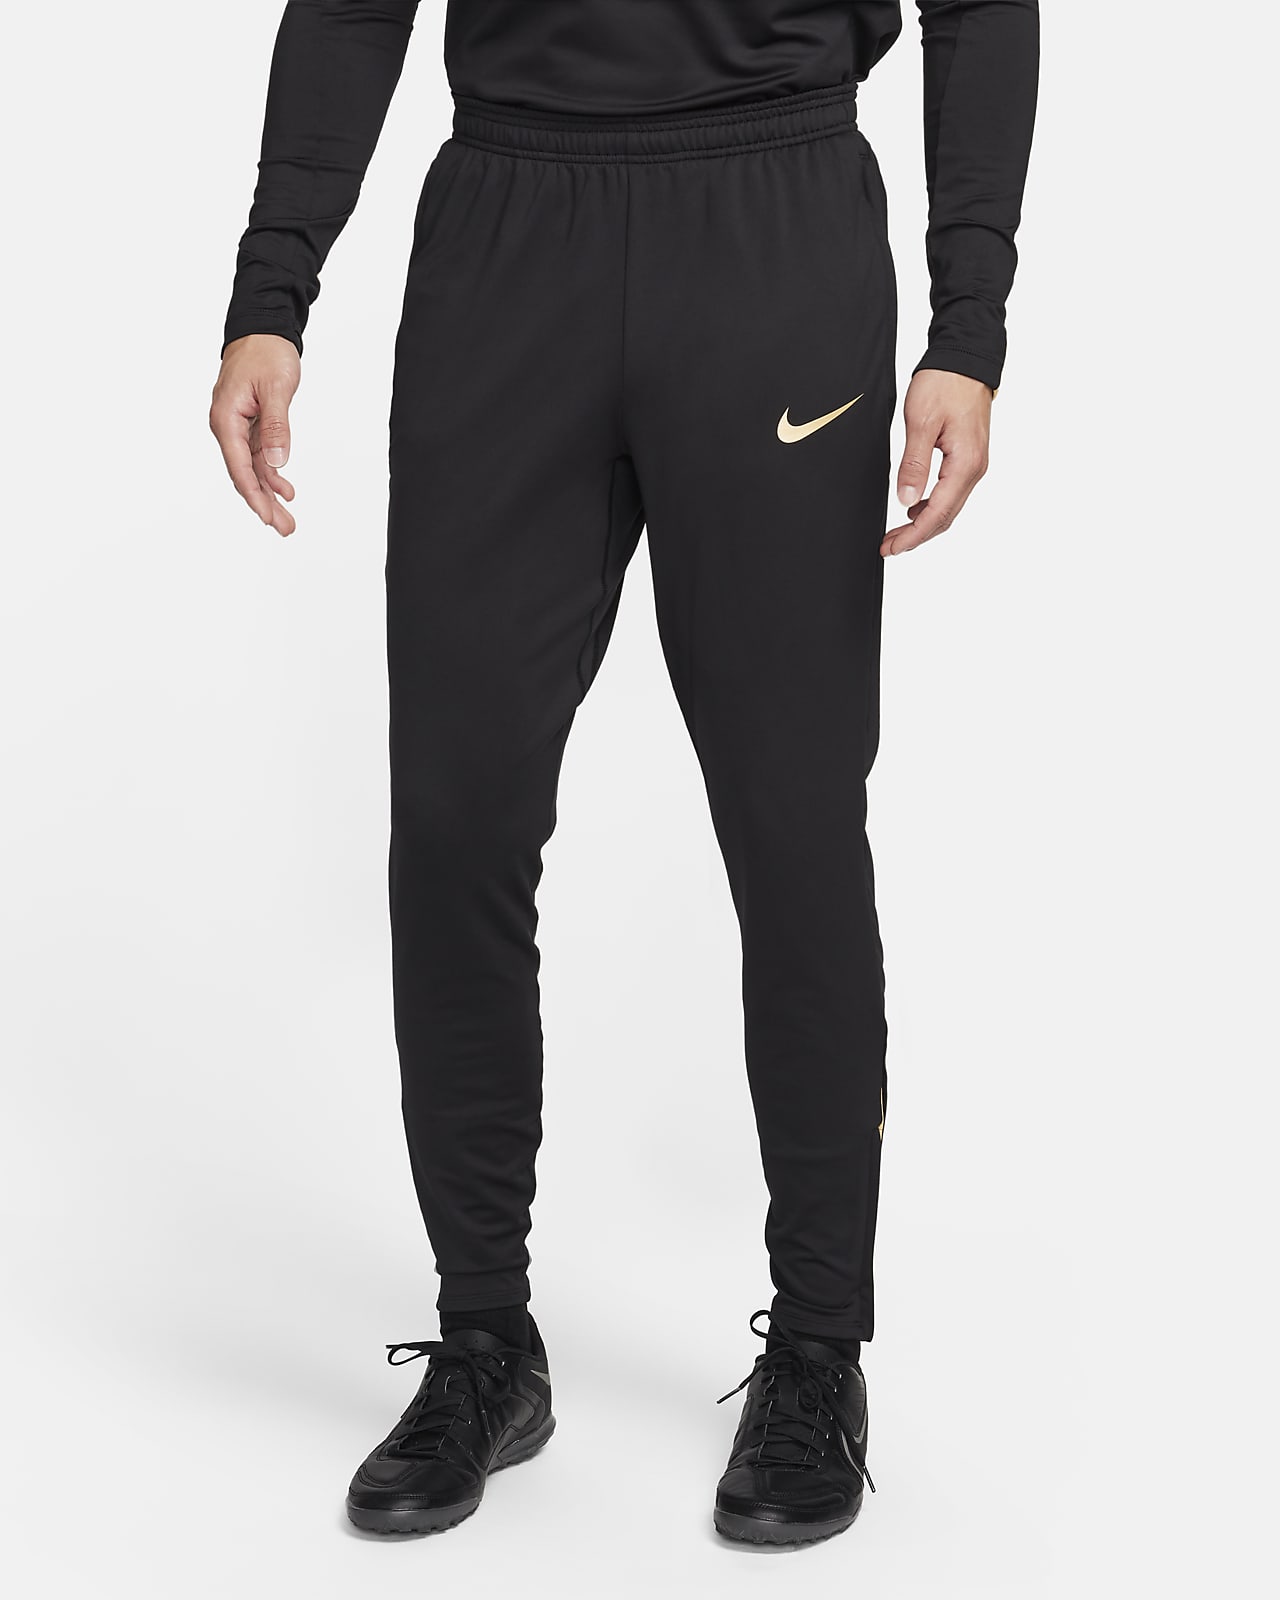 New Nike Legend 2.0 Dri-Fit Womens Slim Fit Athletic Pants.